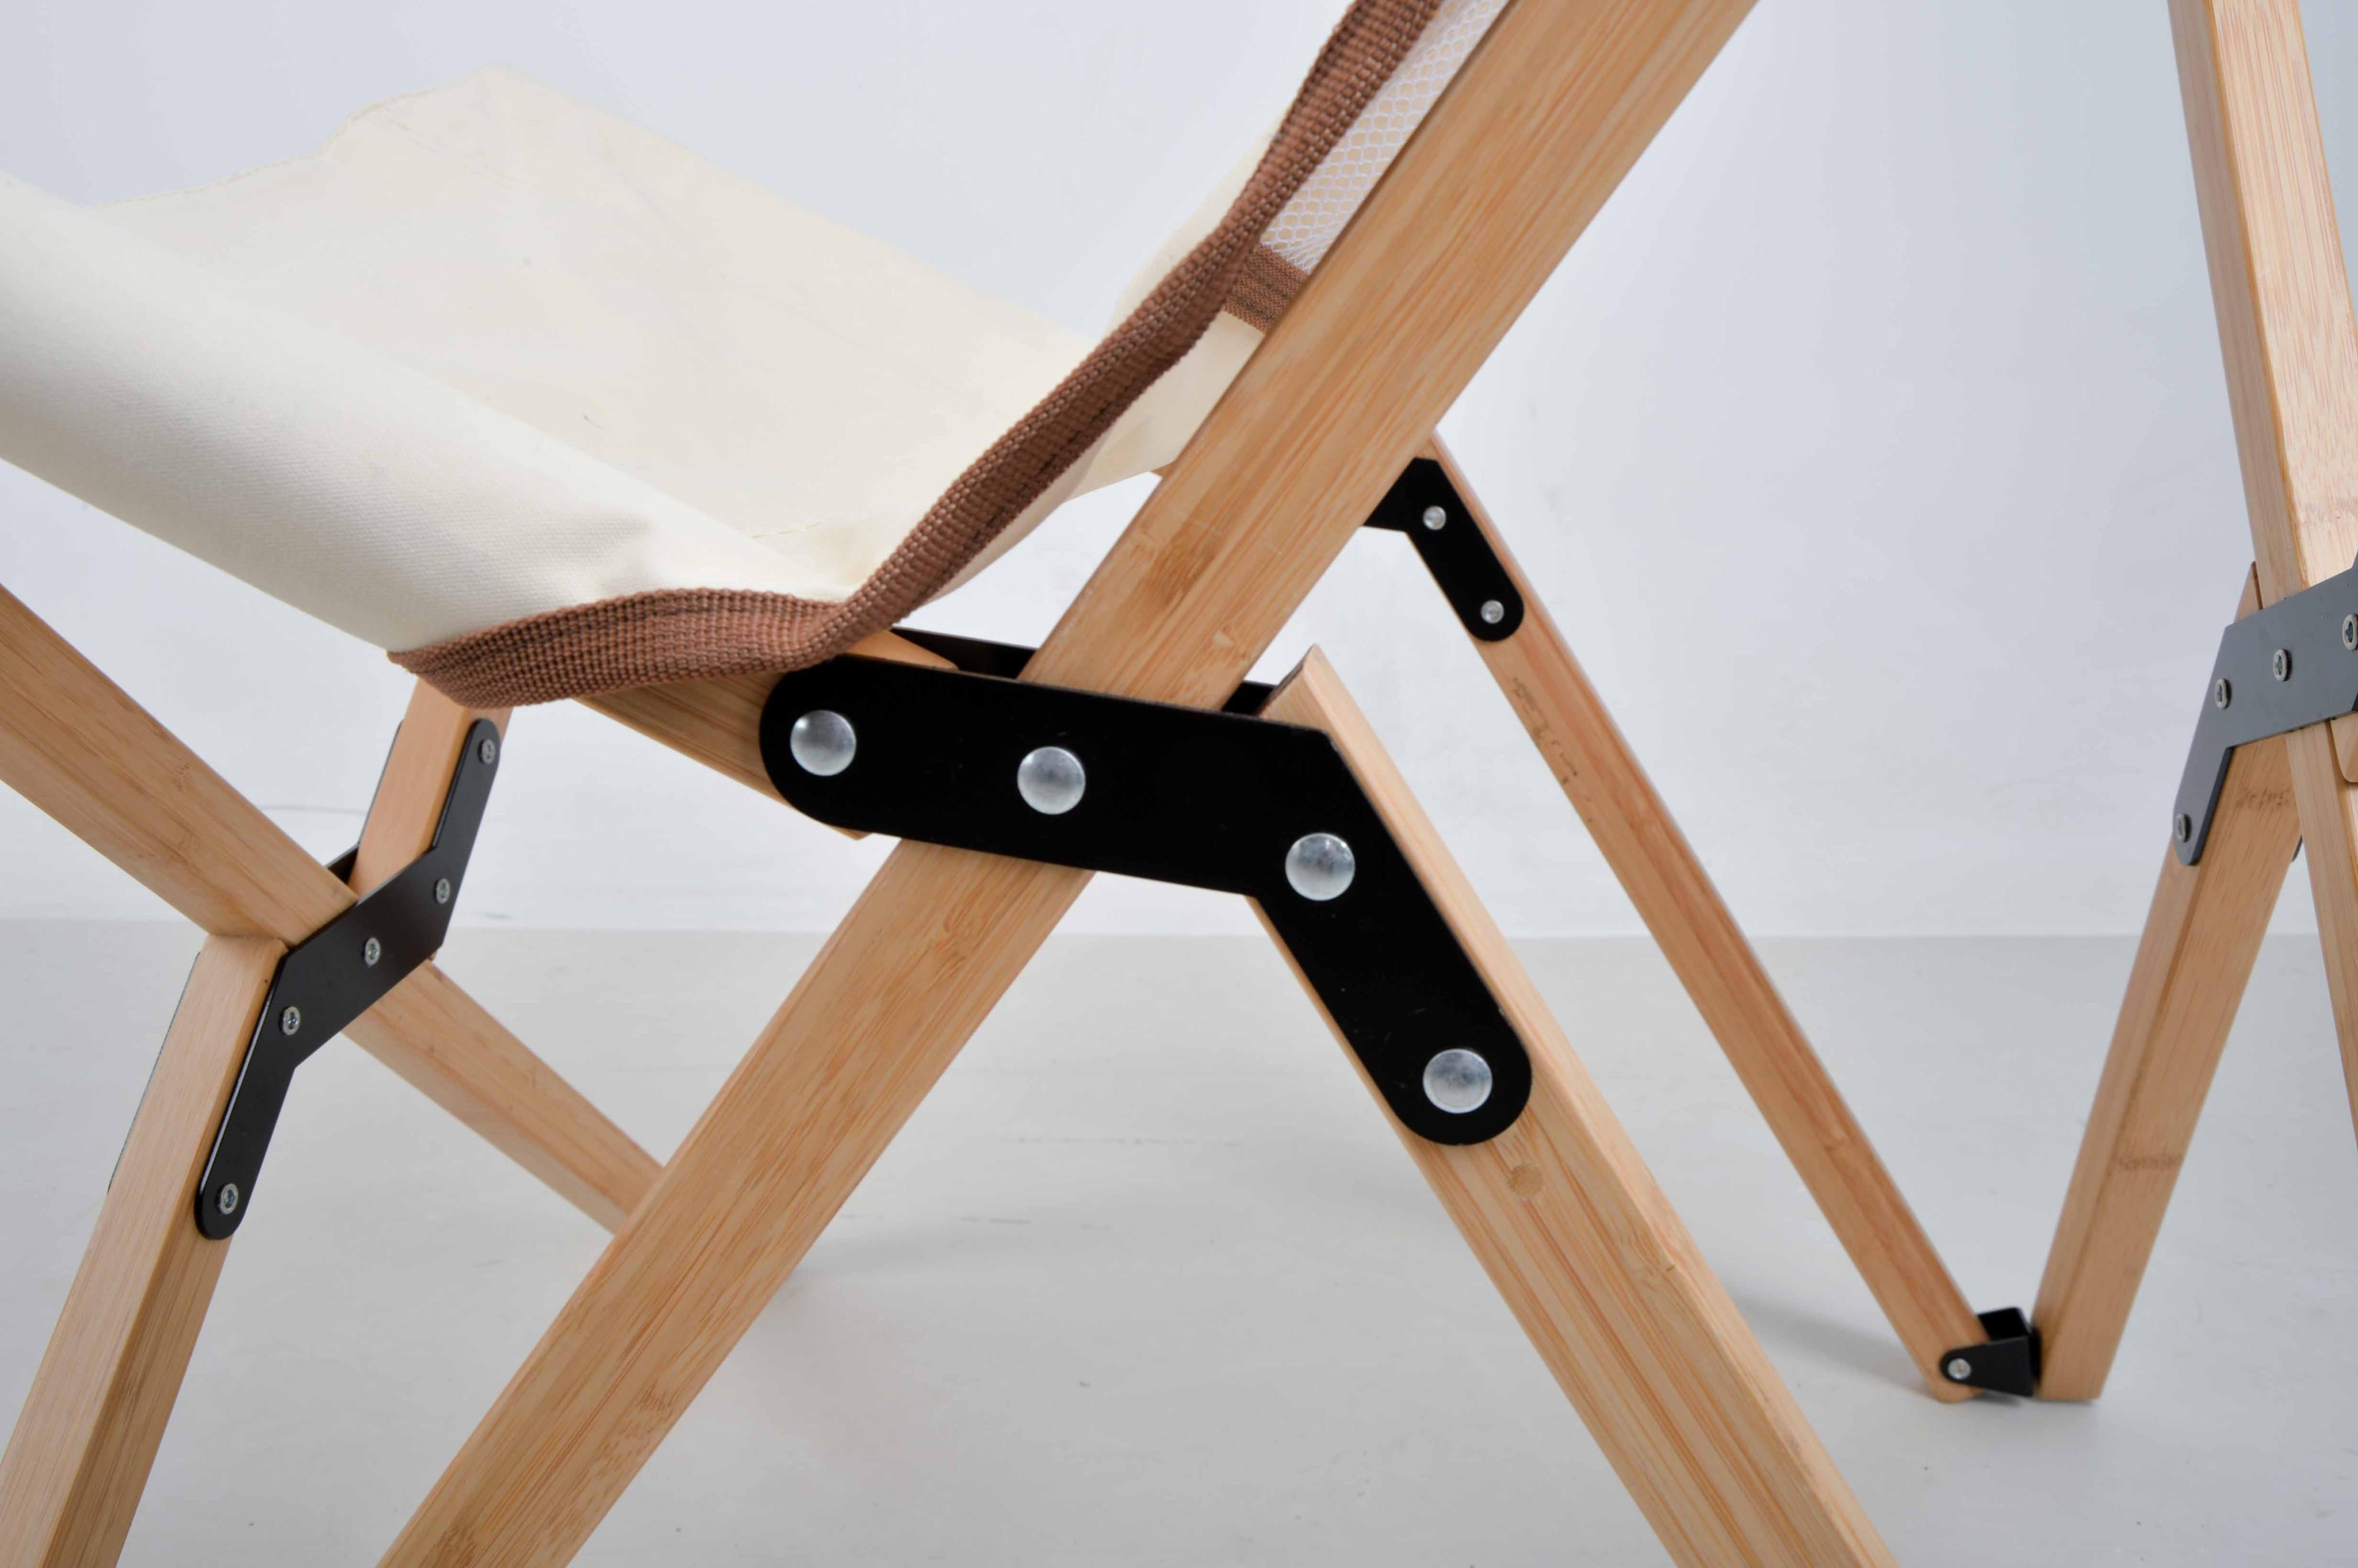 Bamboo Canvas Chair